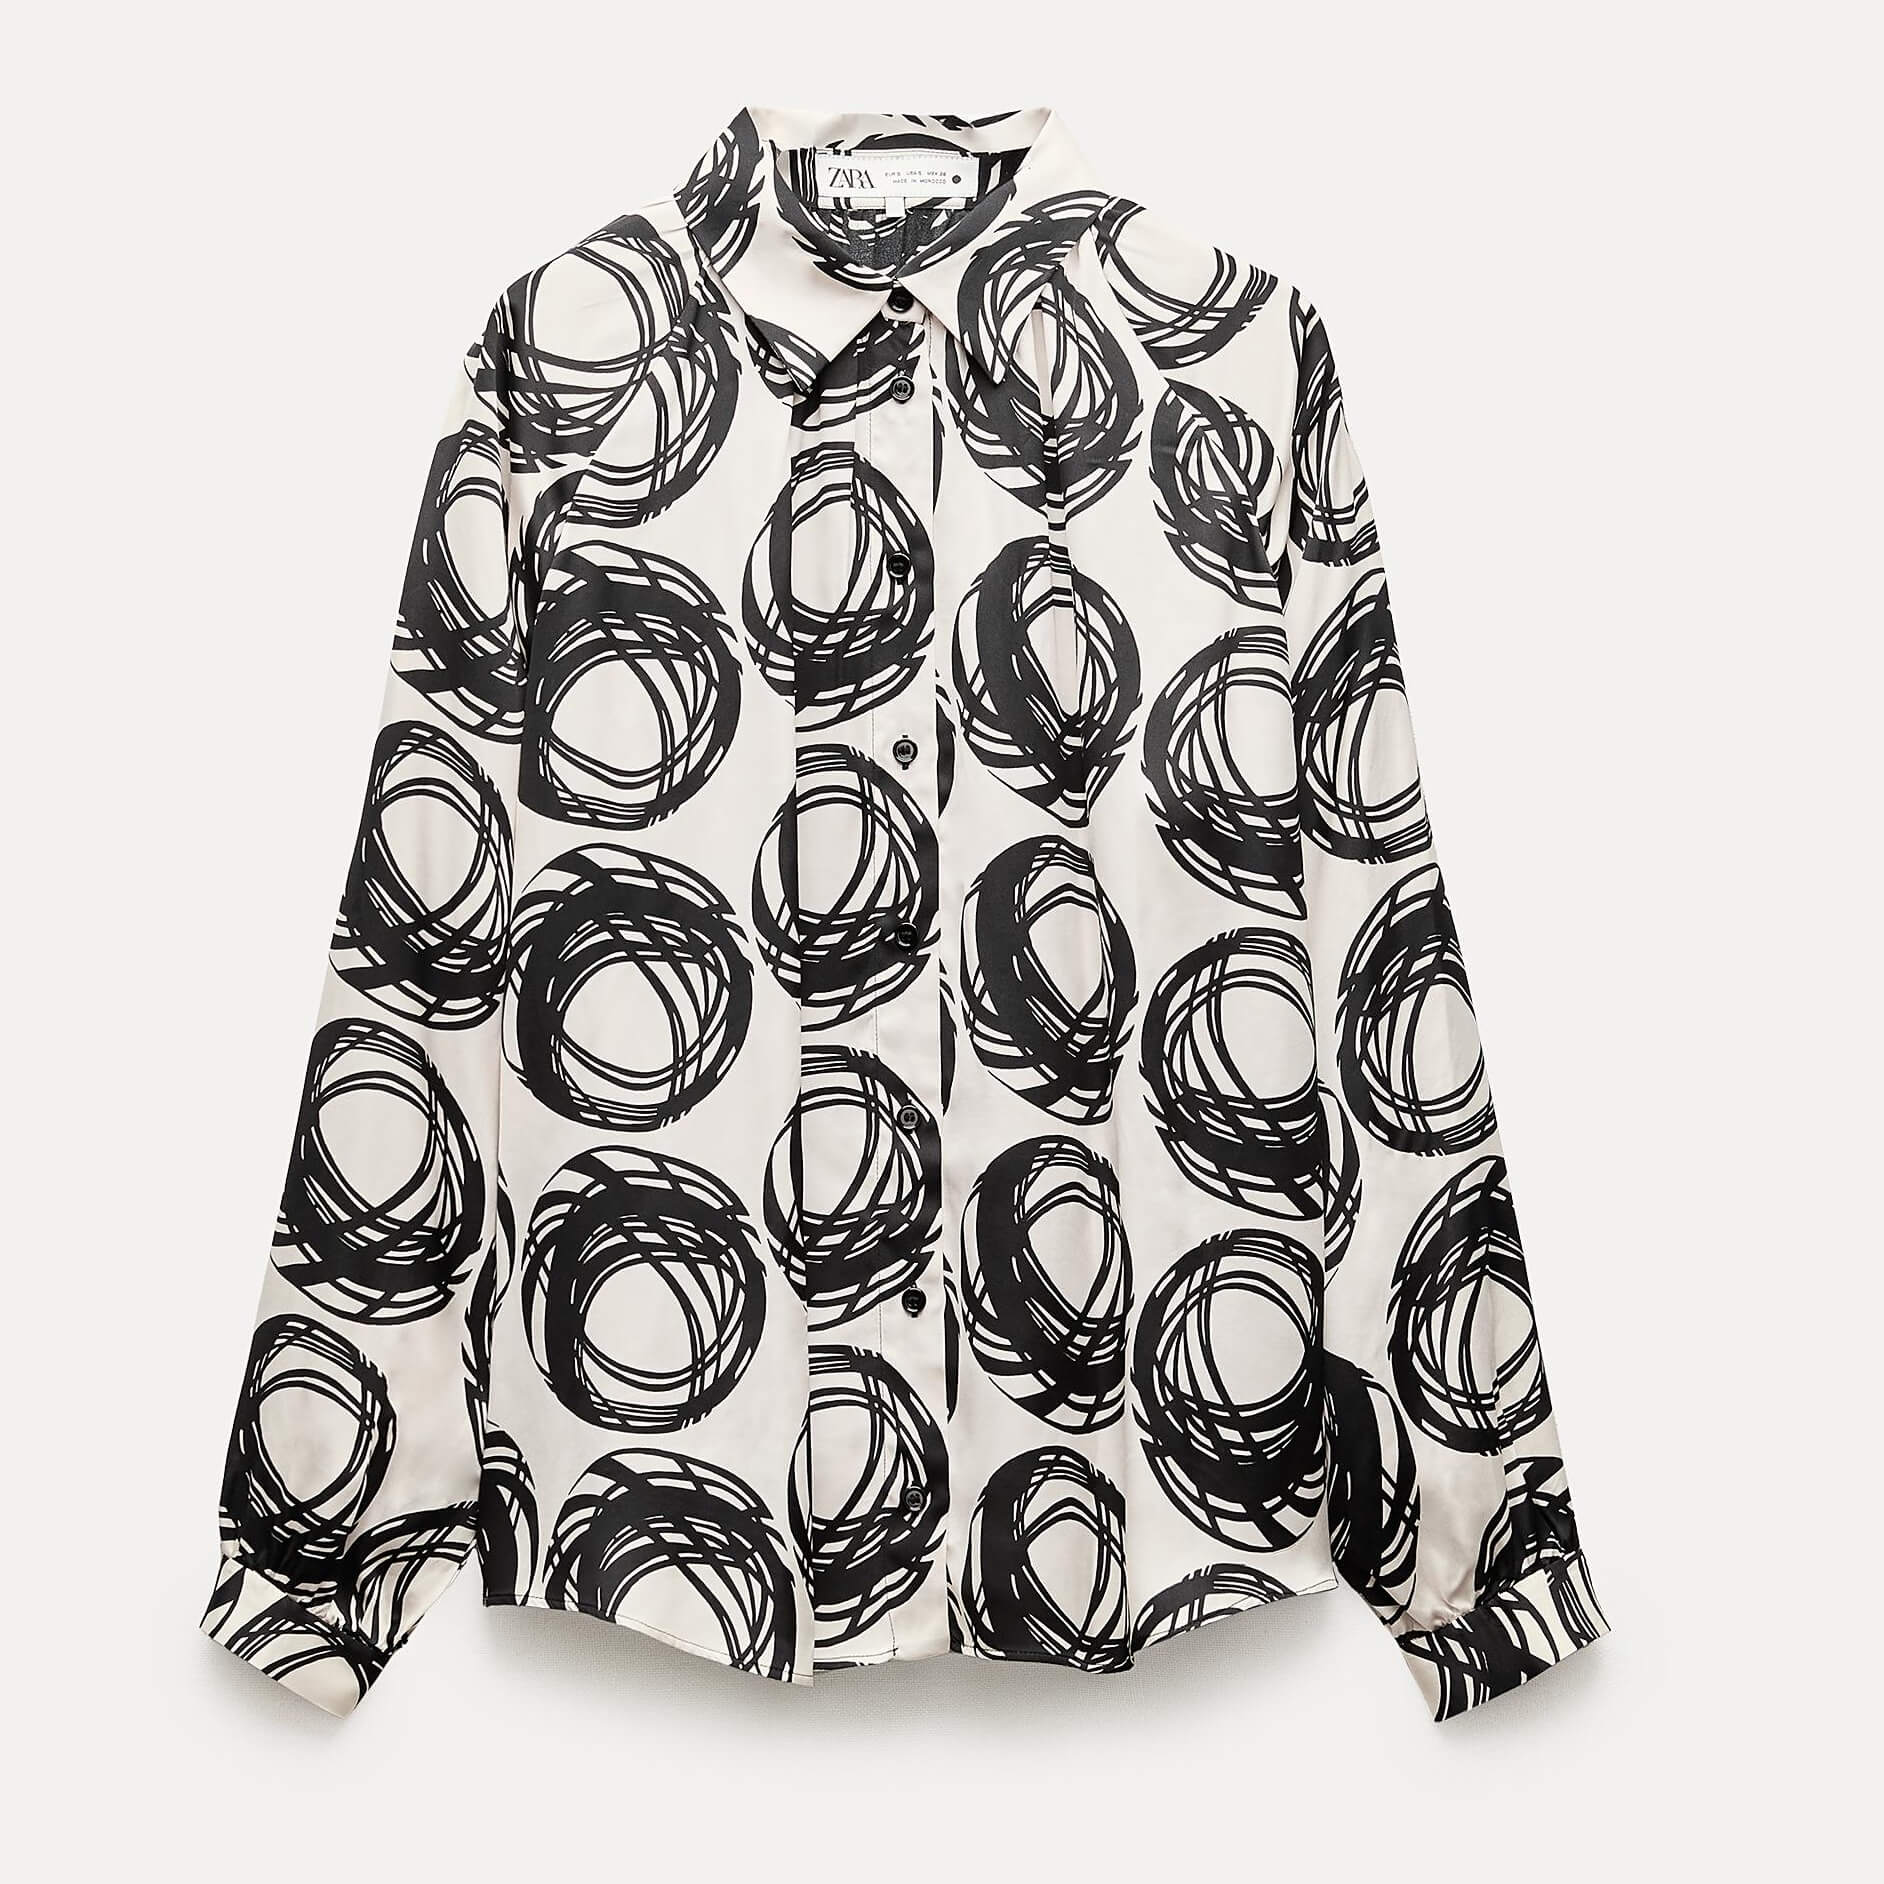 Блузка Zara ZW Collection Printed, молочный/черный